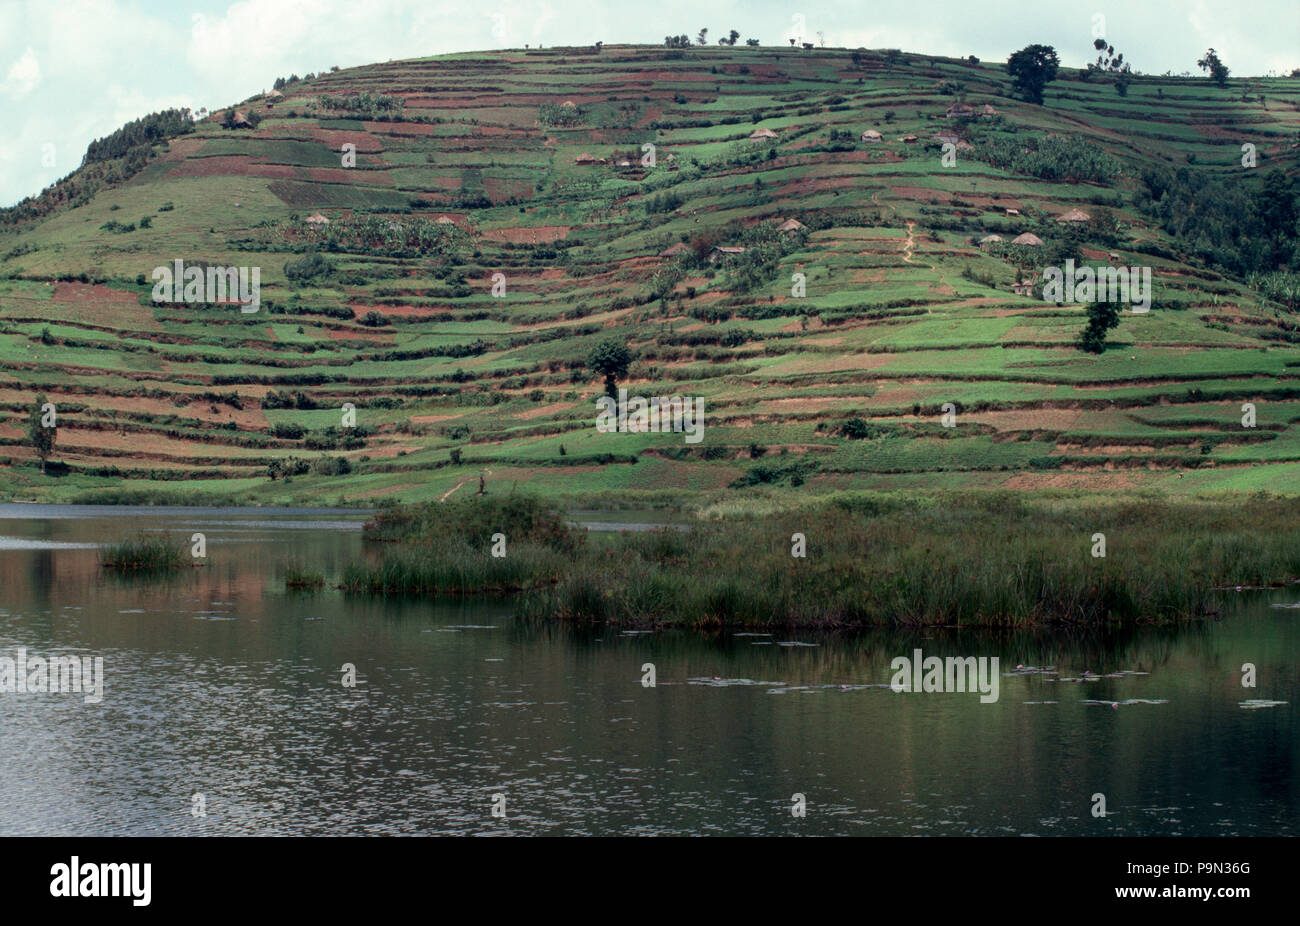 Farmland on the slopes of an extinct volcano and Lake Bunyoni. Stock Photo